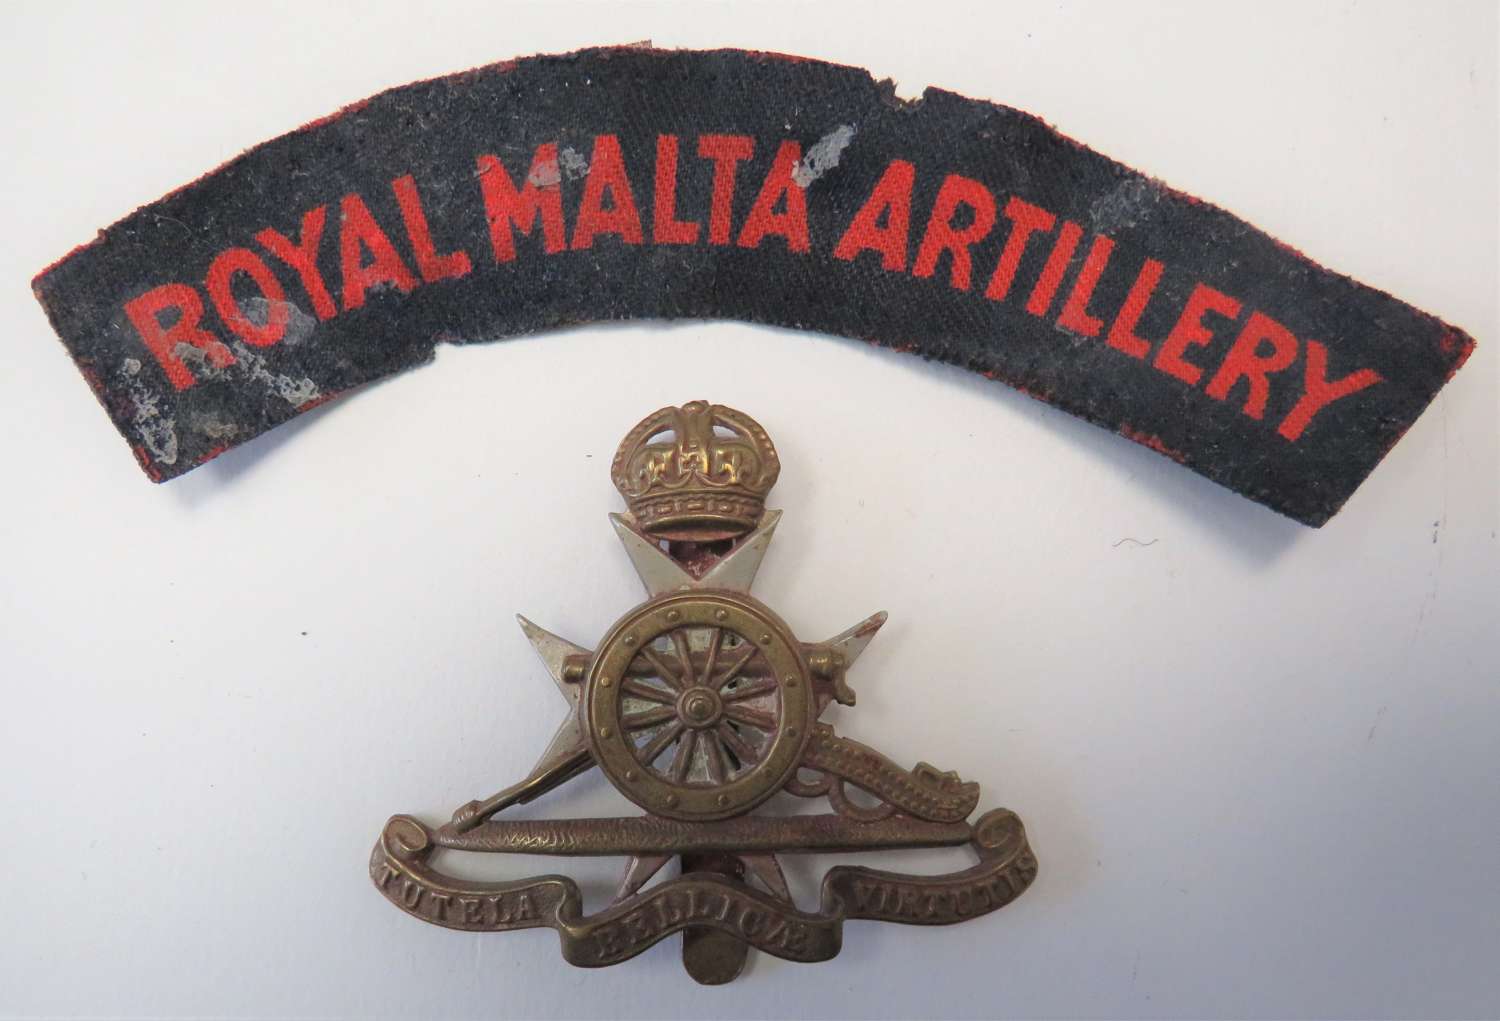 Royal Malta Artillery Printed Title and Cap Badge